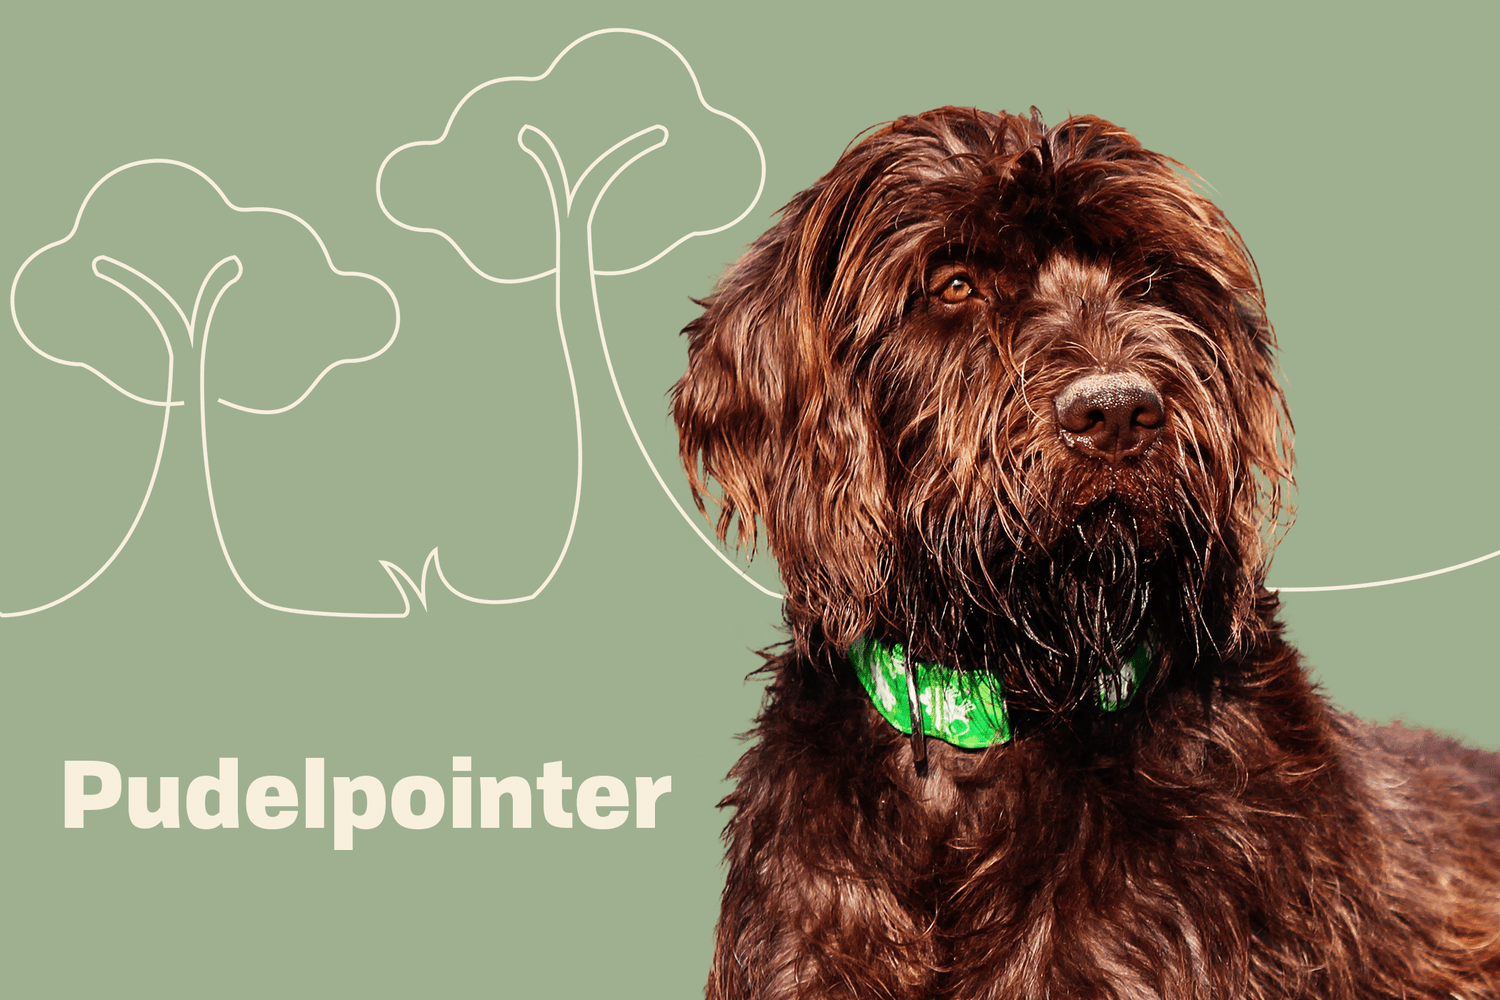 Pudelpointer dog breed profile treatment